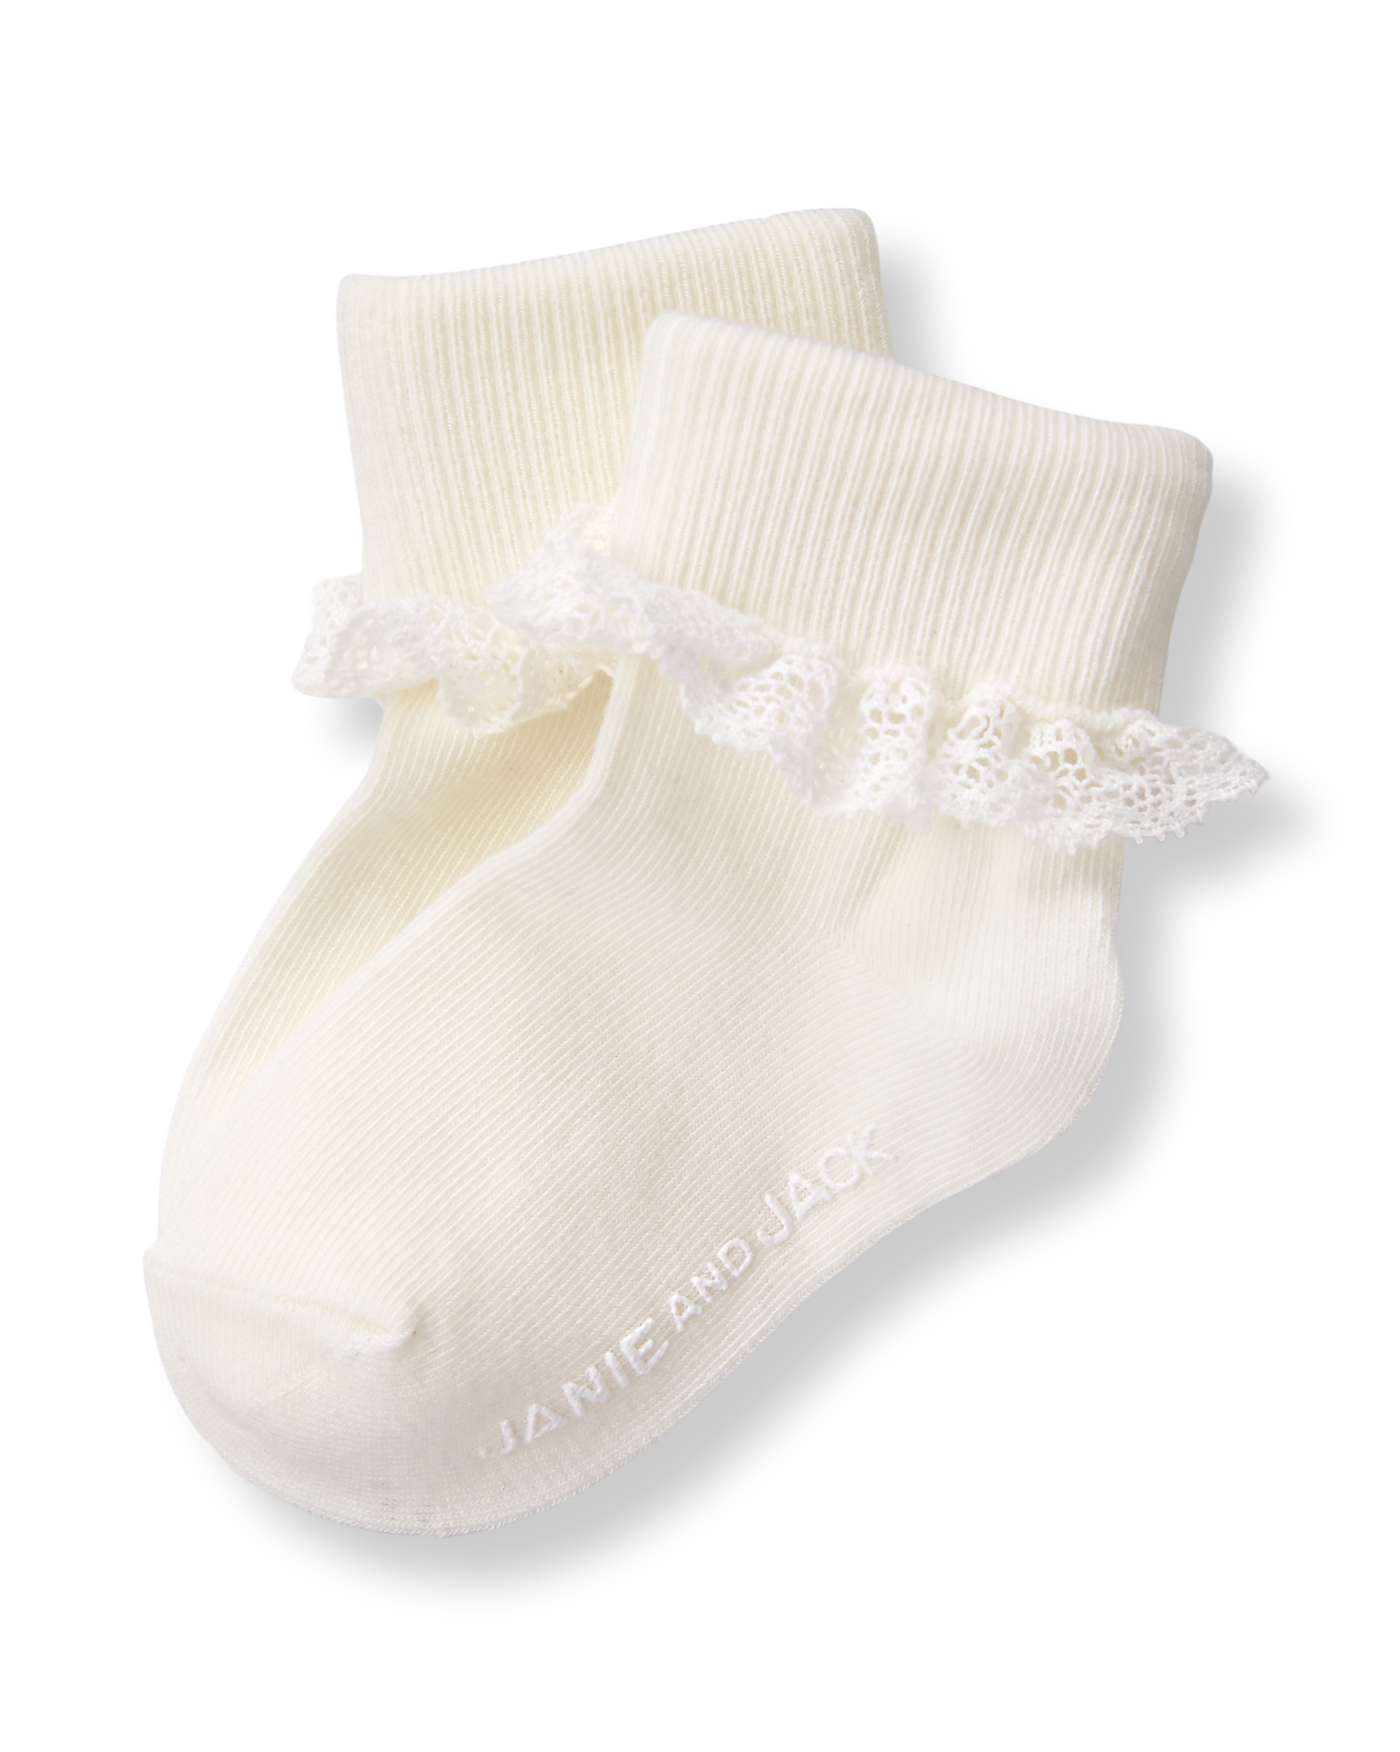 baby ruffle socks